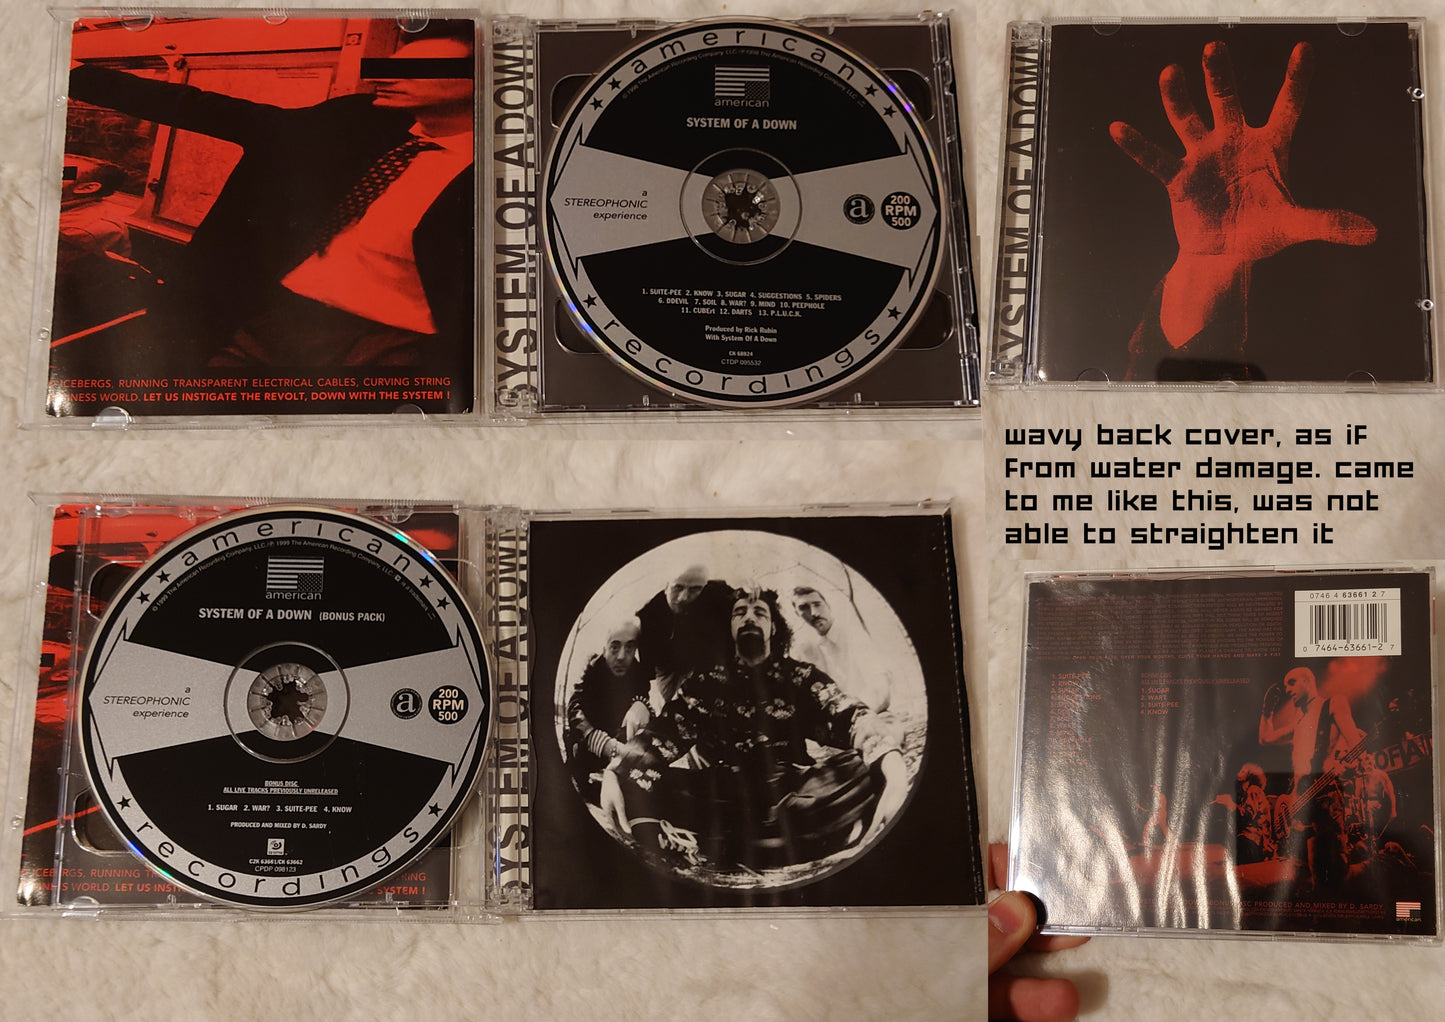 CD albums #3 - Radiohead, Rise Against, Sabaton, Serj Tankian, Soil, System of a Down